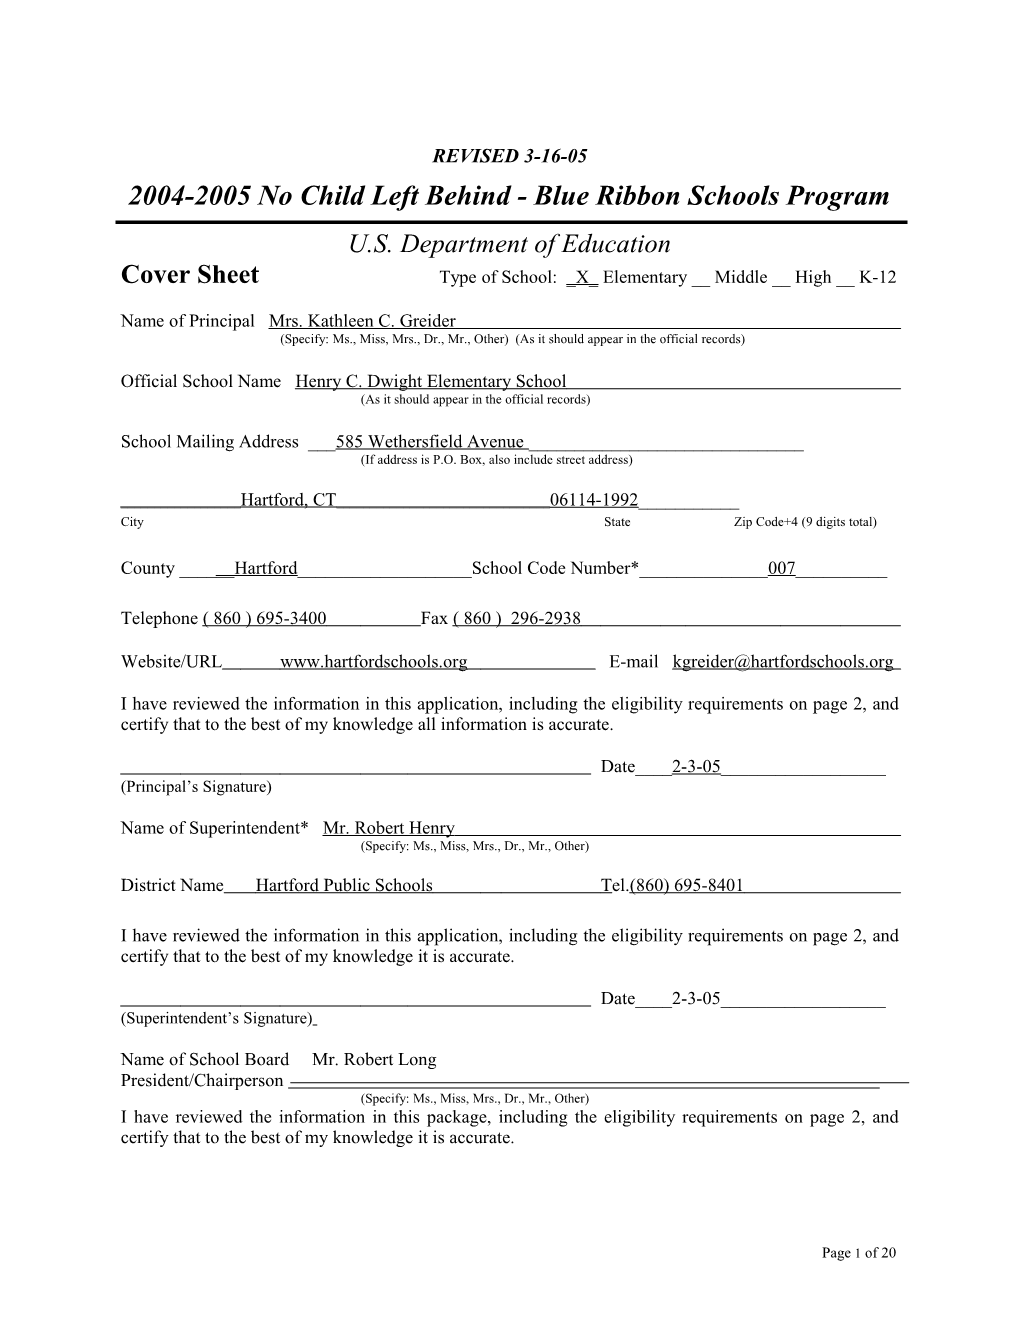 Henry C. Dwight Elementary School Application: 2004-2005, No Child Left Behind - Blue Ribbon